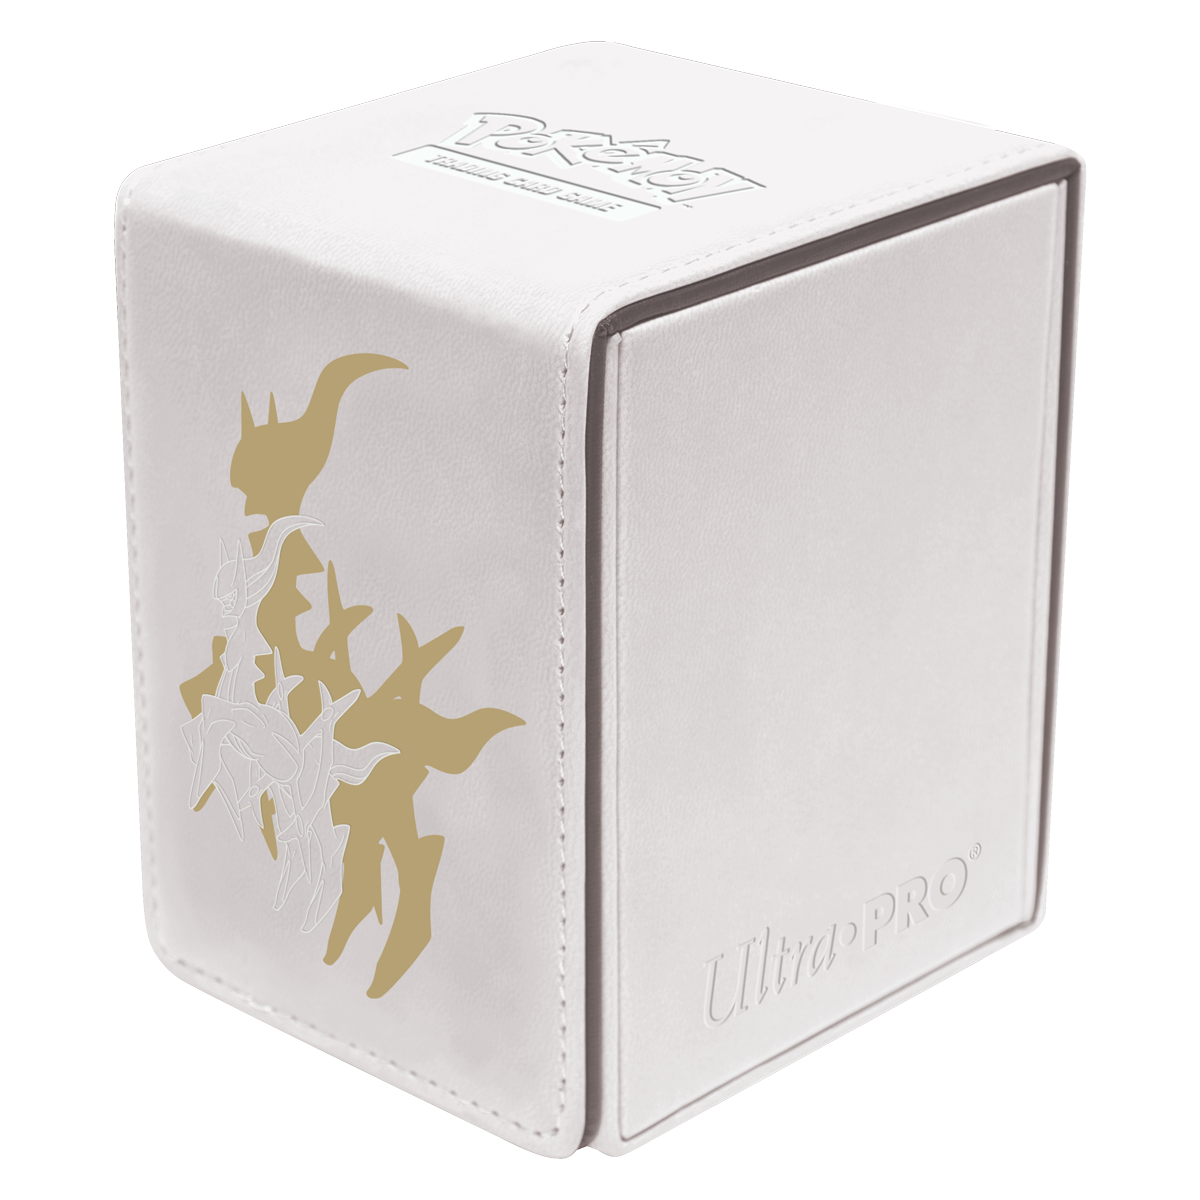 Elite Series: Arceus Alcove Flip Deck Box for Pokémon | Ultra PRO International